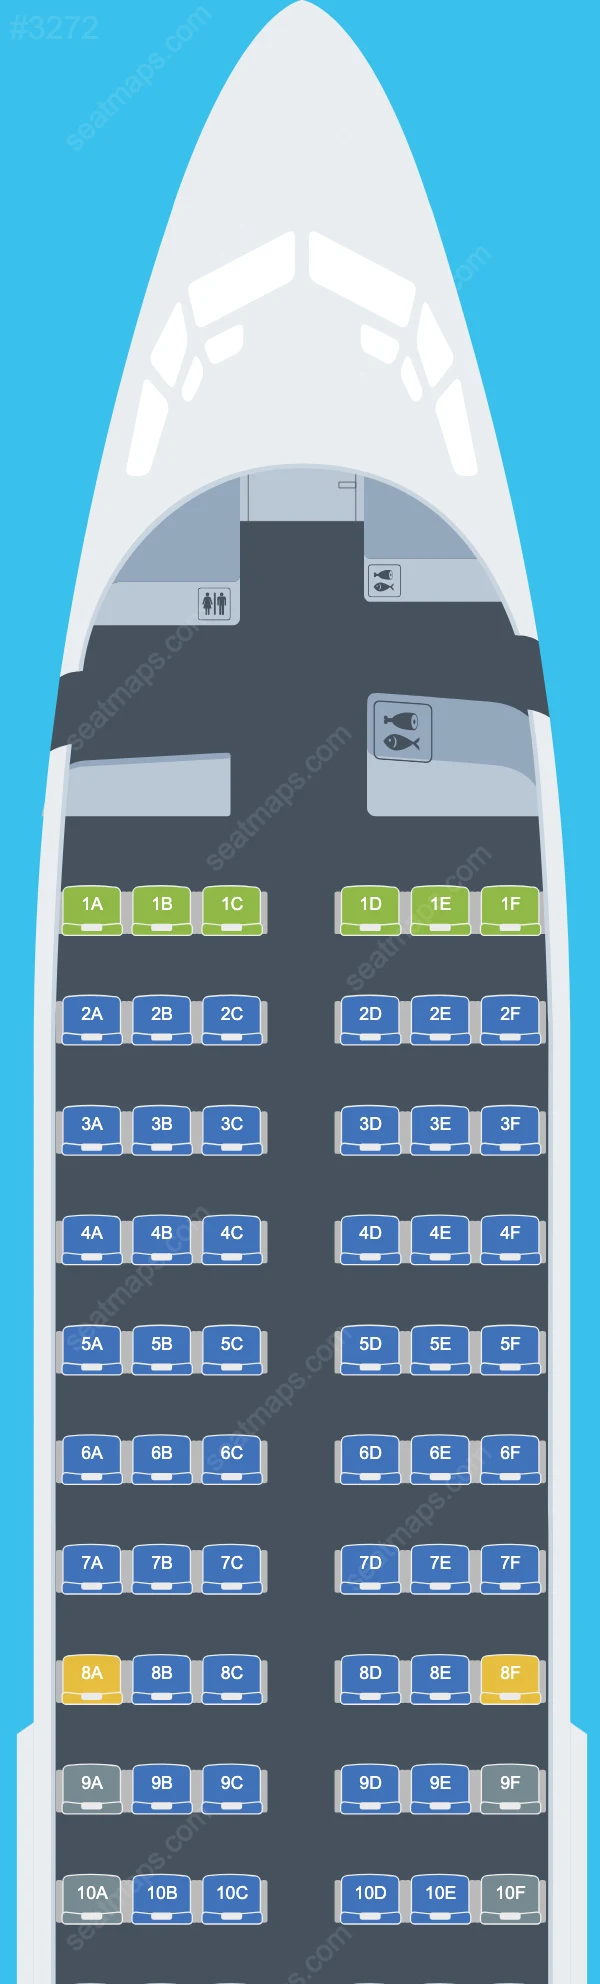 Transavia Boeing 737 Seat Maps 737-700